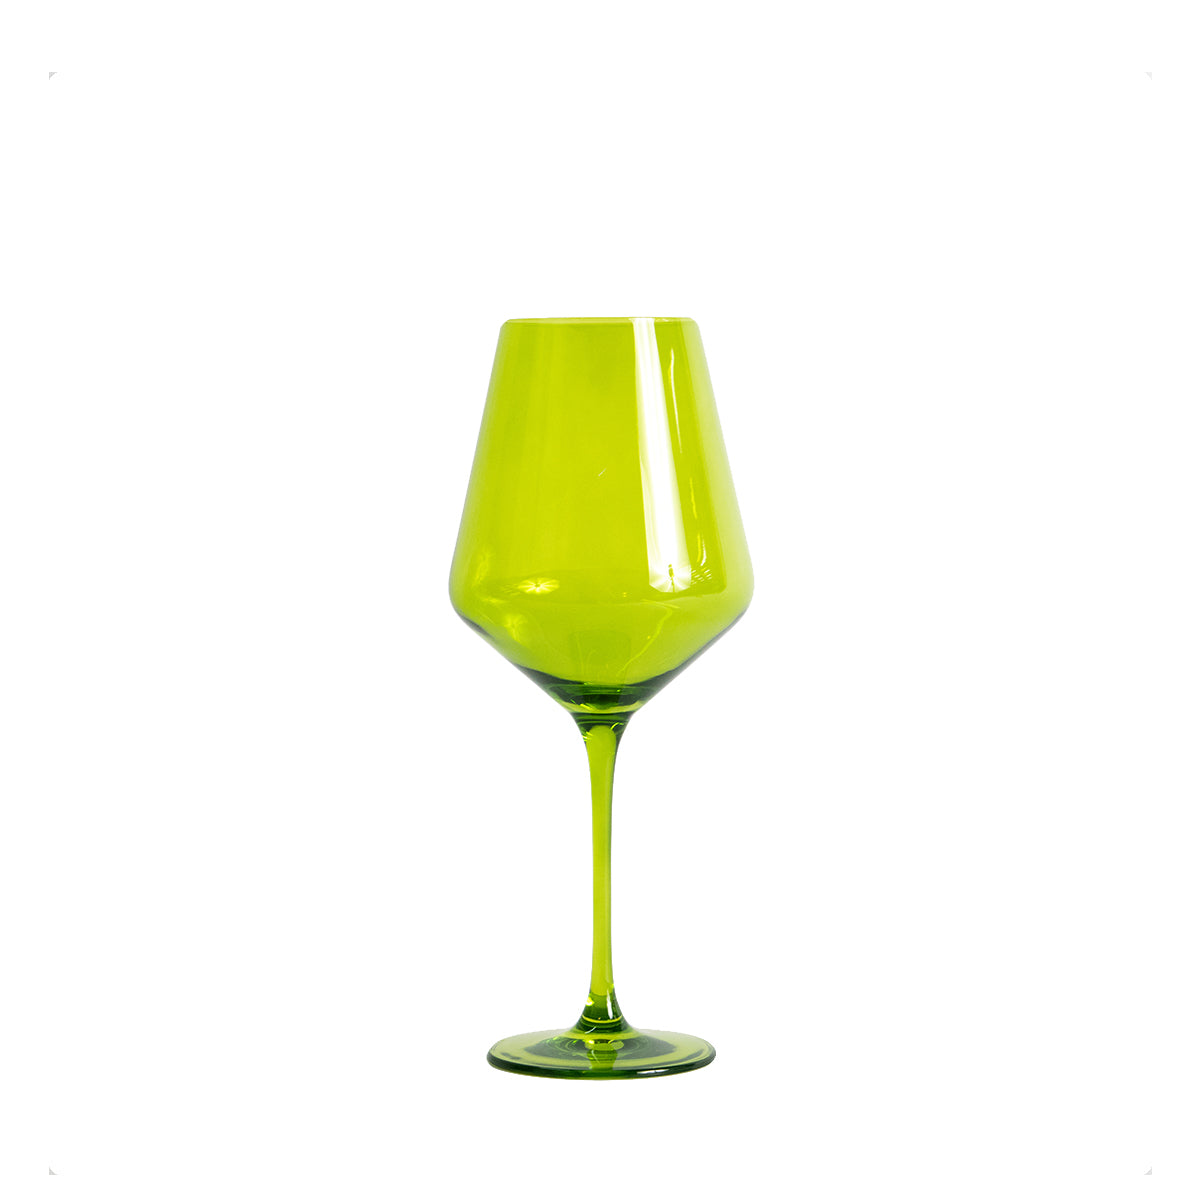 Green Pine Tree Wine Glasses